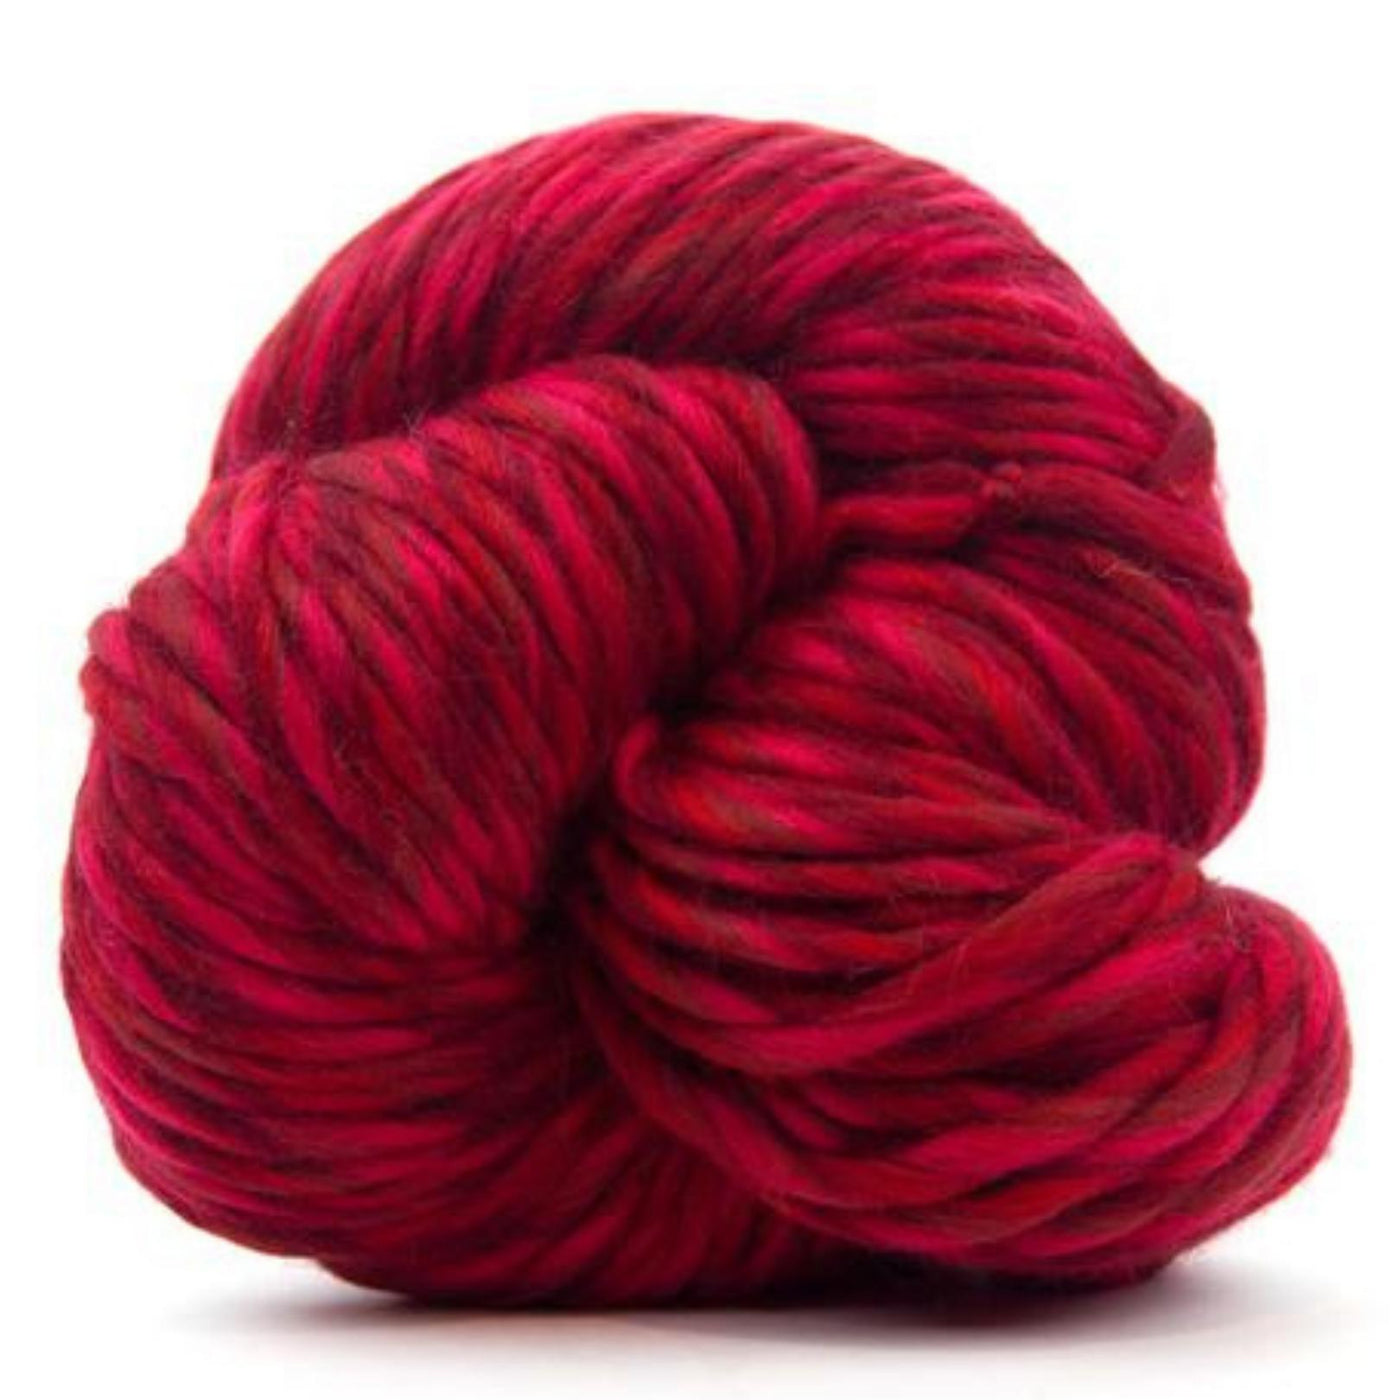 Premium Super Bulky (Chunky) Weight Multicolored Merino Yarn-Yarn-Revolution Fibers-Passion Red-Revolution Fibers